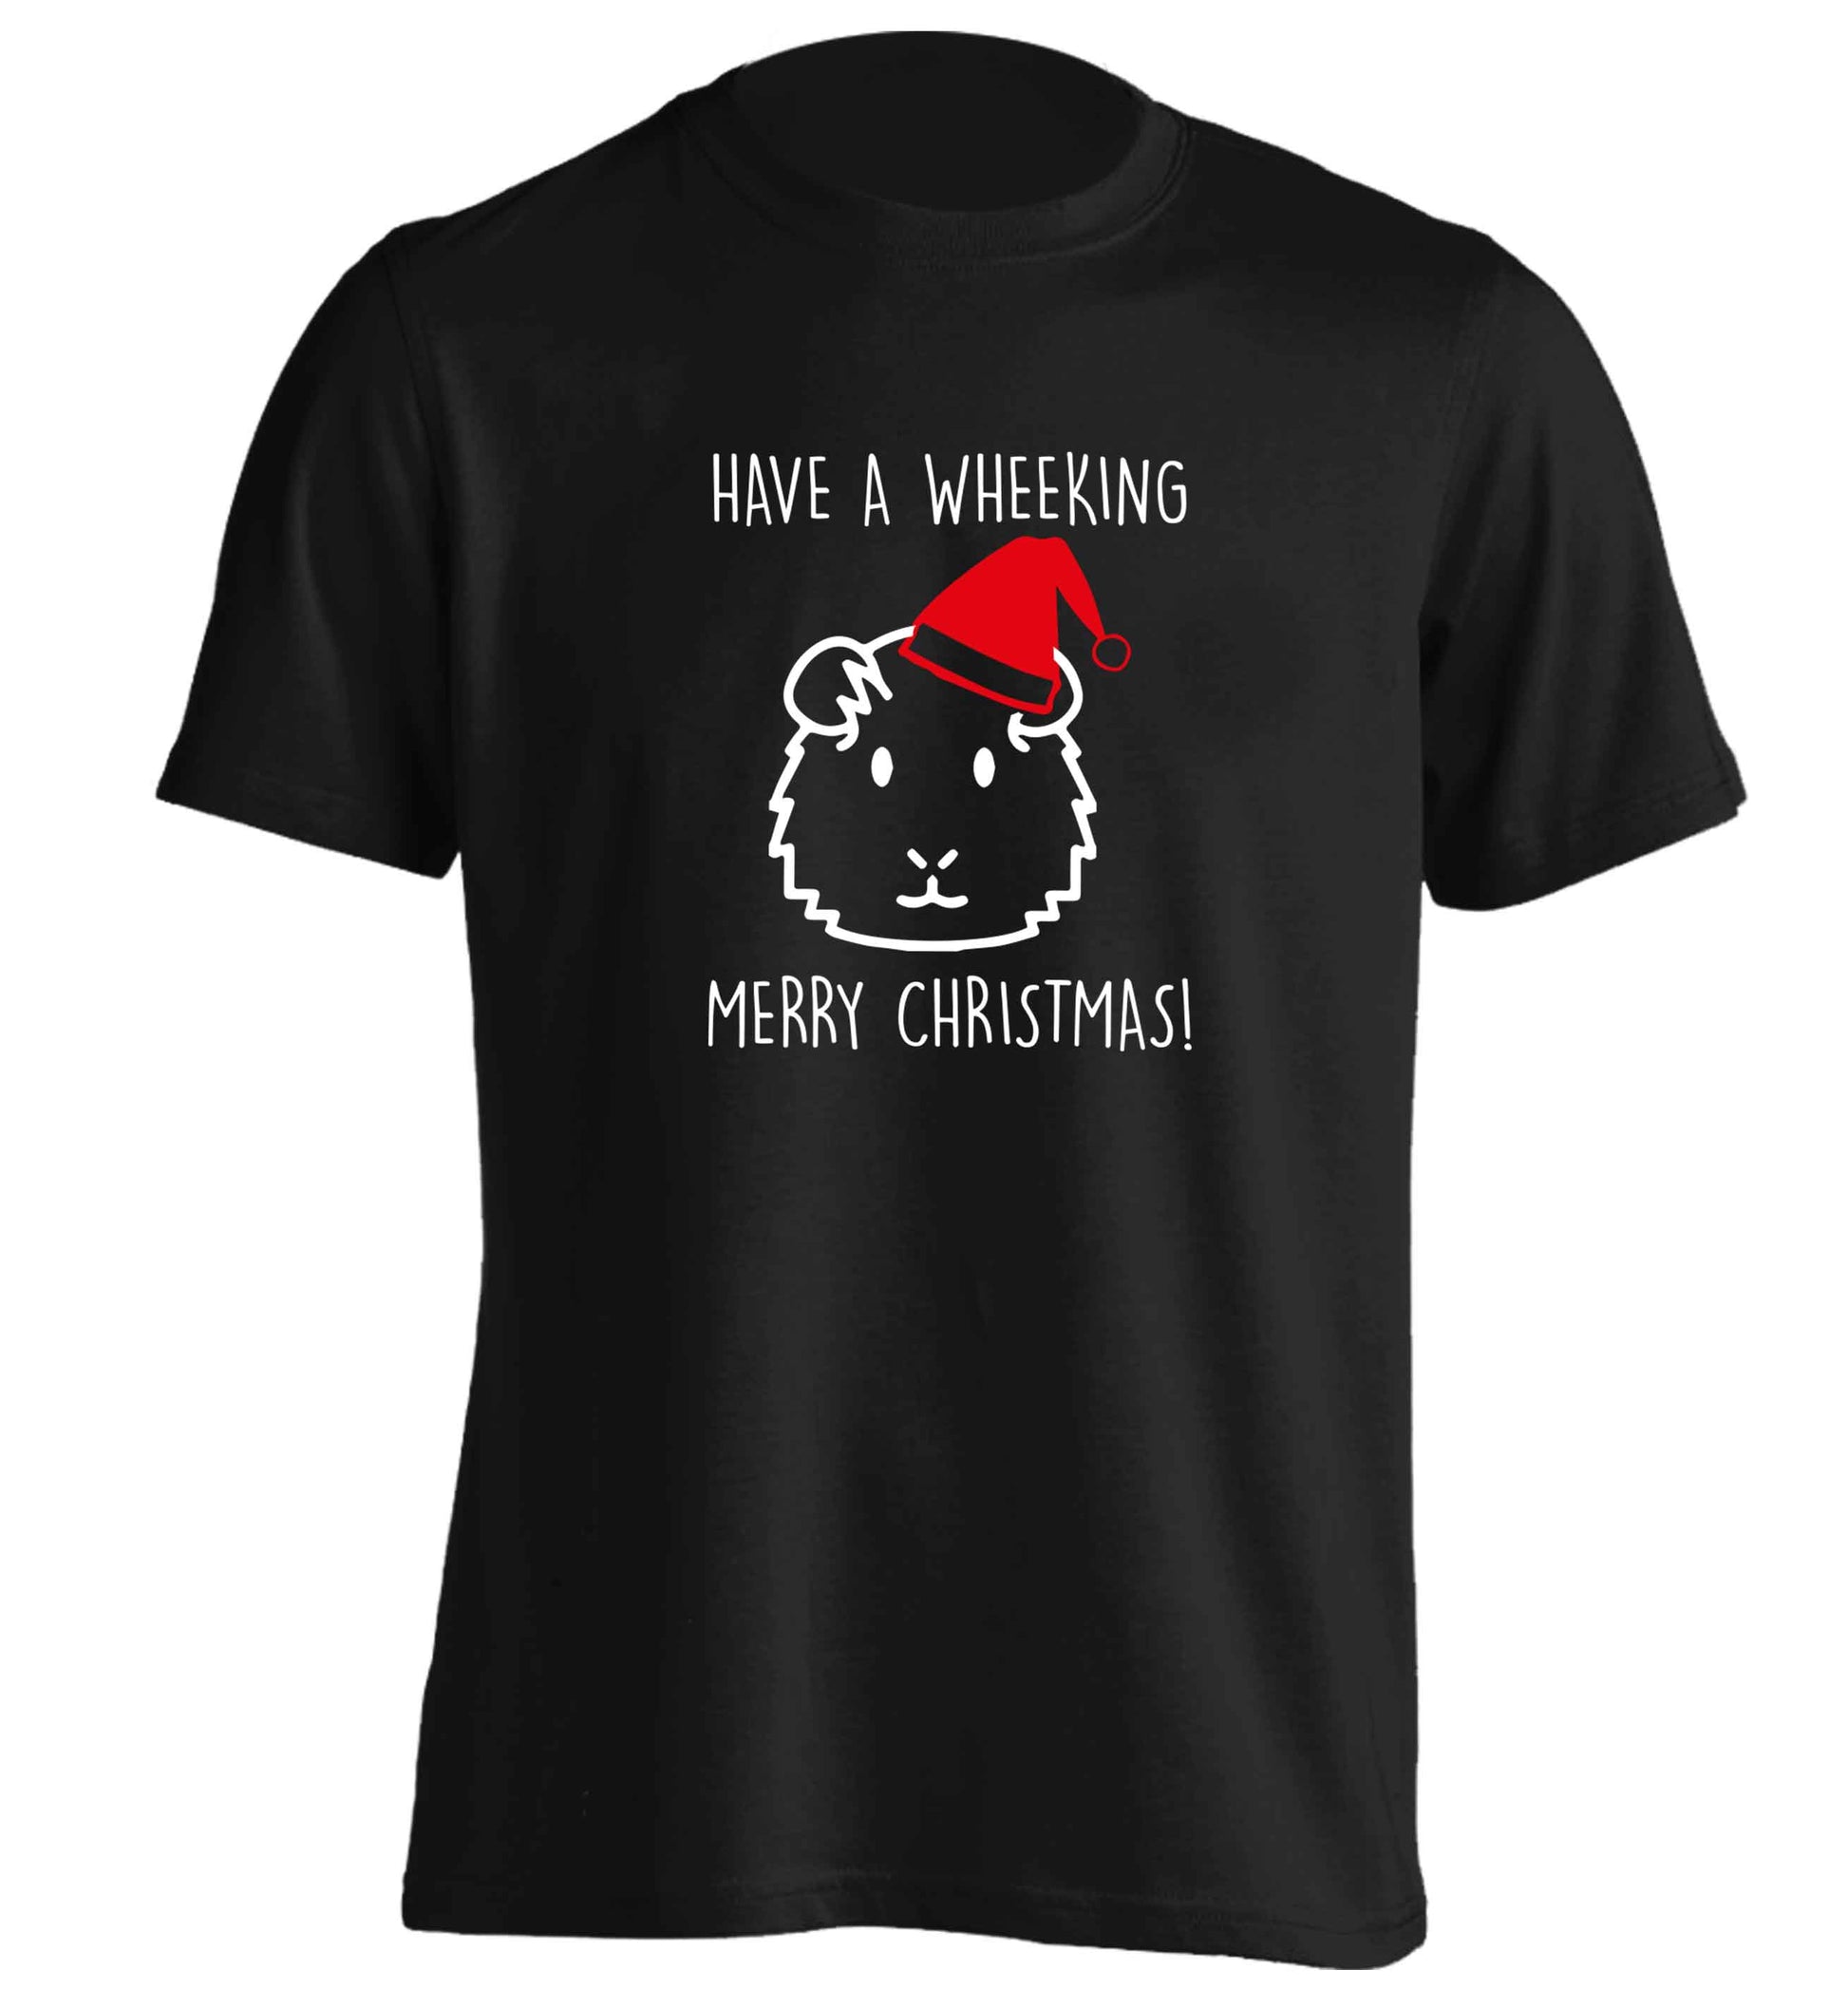 Have a wheeking merry Christmas adults unisex black Tshirt 2XL